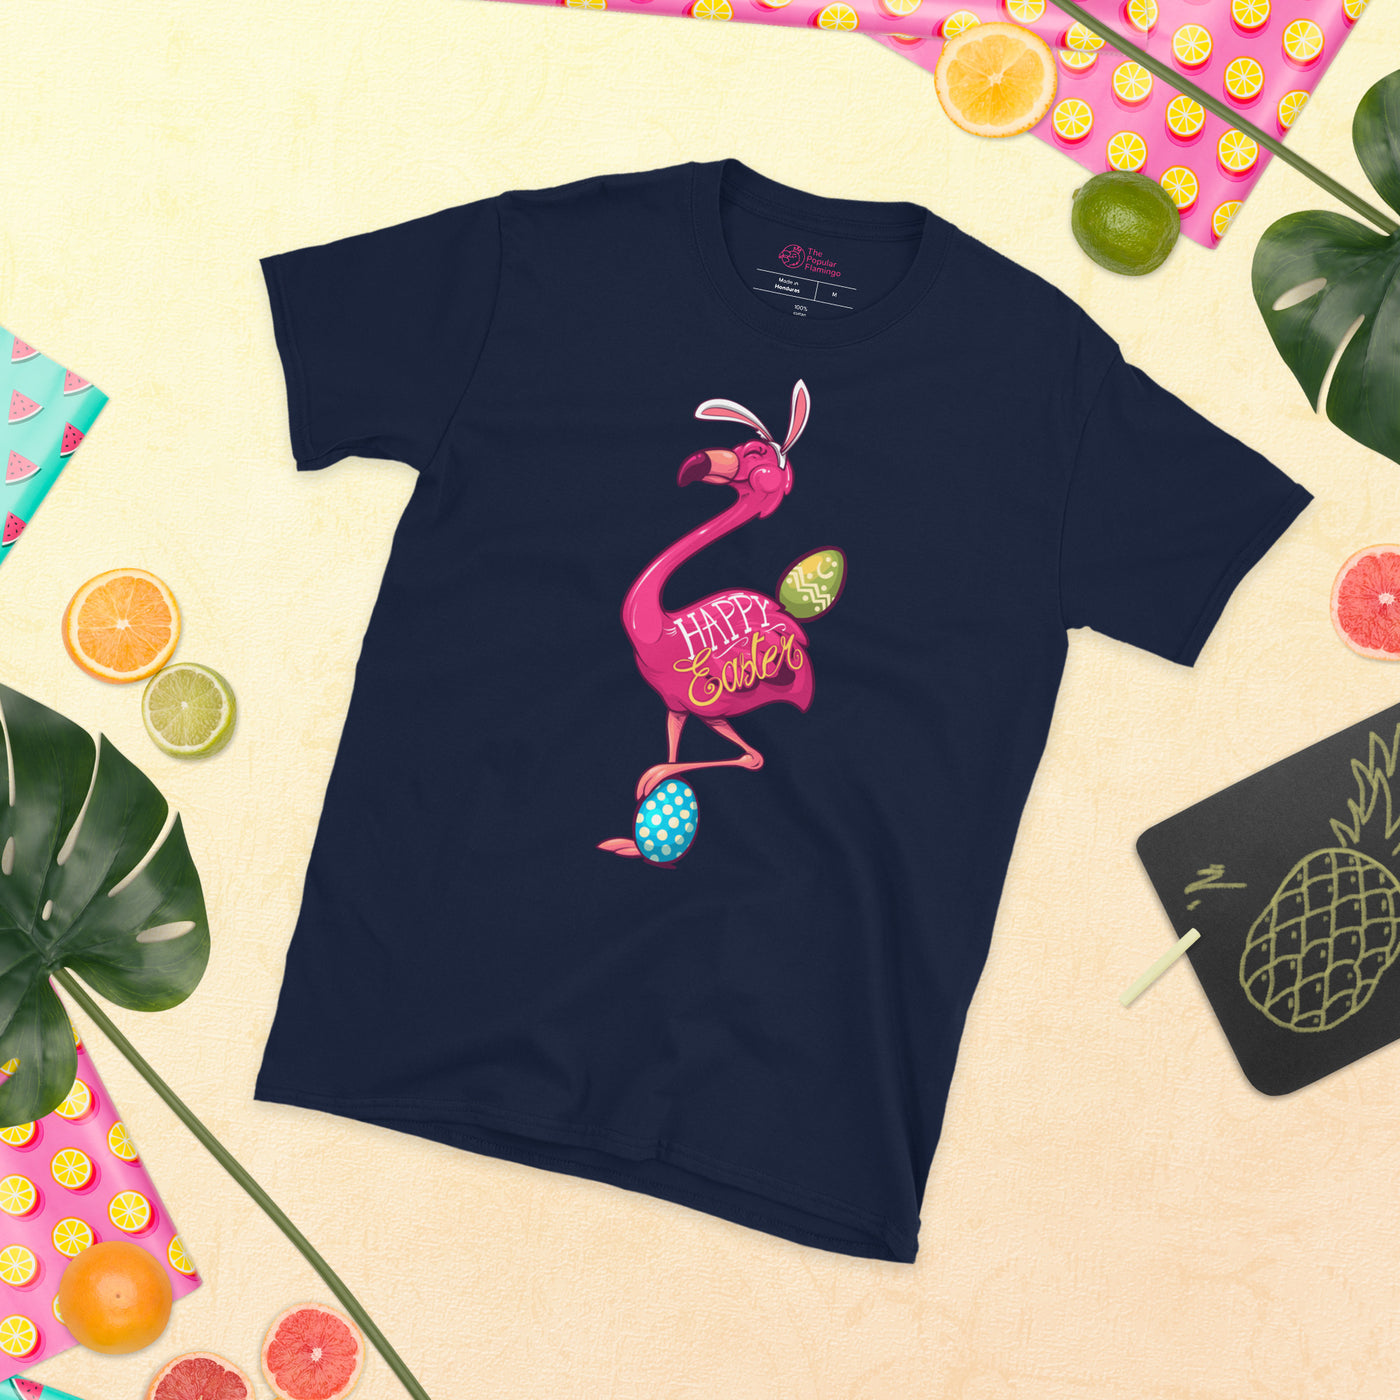 Original The Popular Flamingo Happy Easter T-Shirt